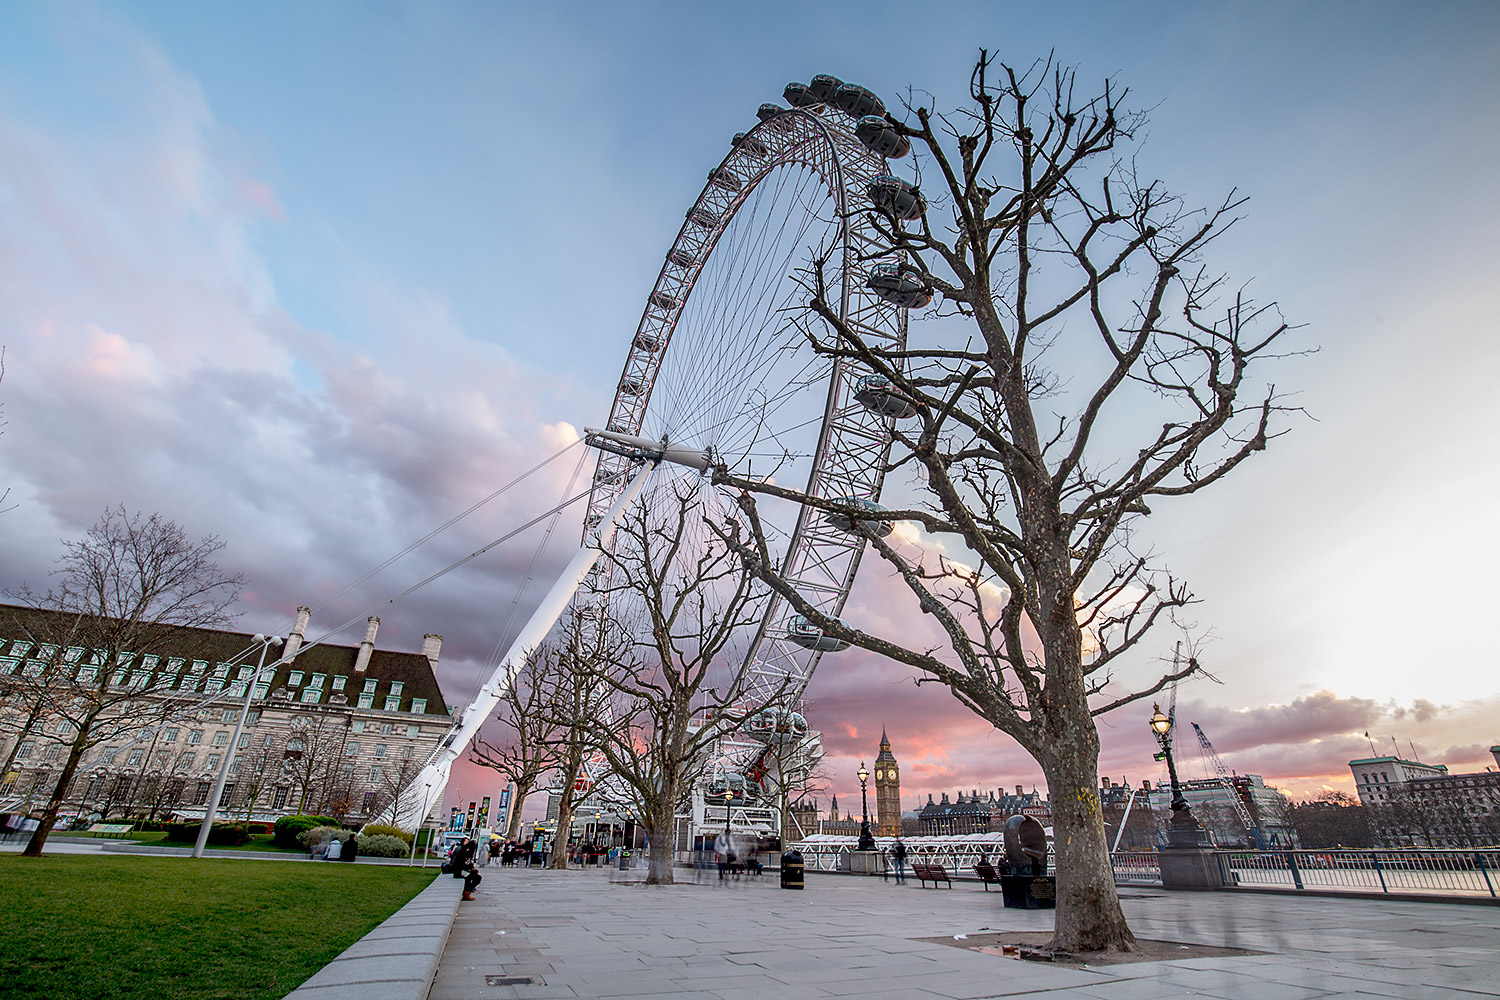 The London Eye ferris wheel